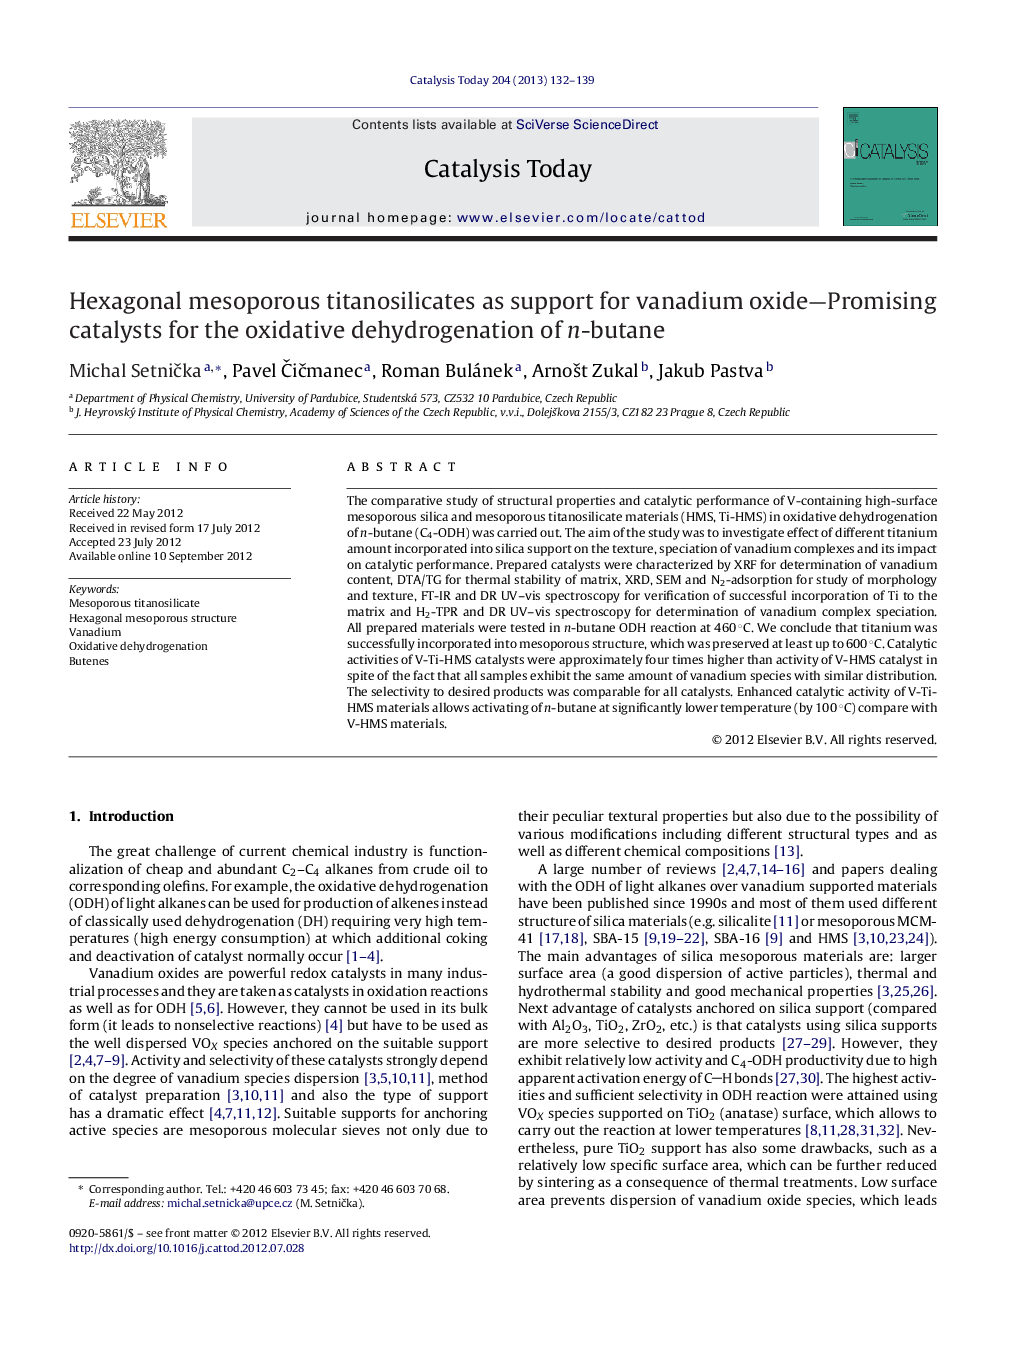 Hexagonal mesoporous titanosilicates as support for vanadium oxide—Promising catalysts for the oxidative dehydrogenation of n-butane